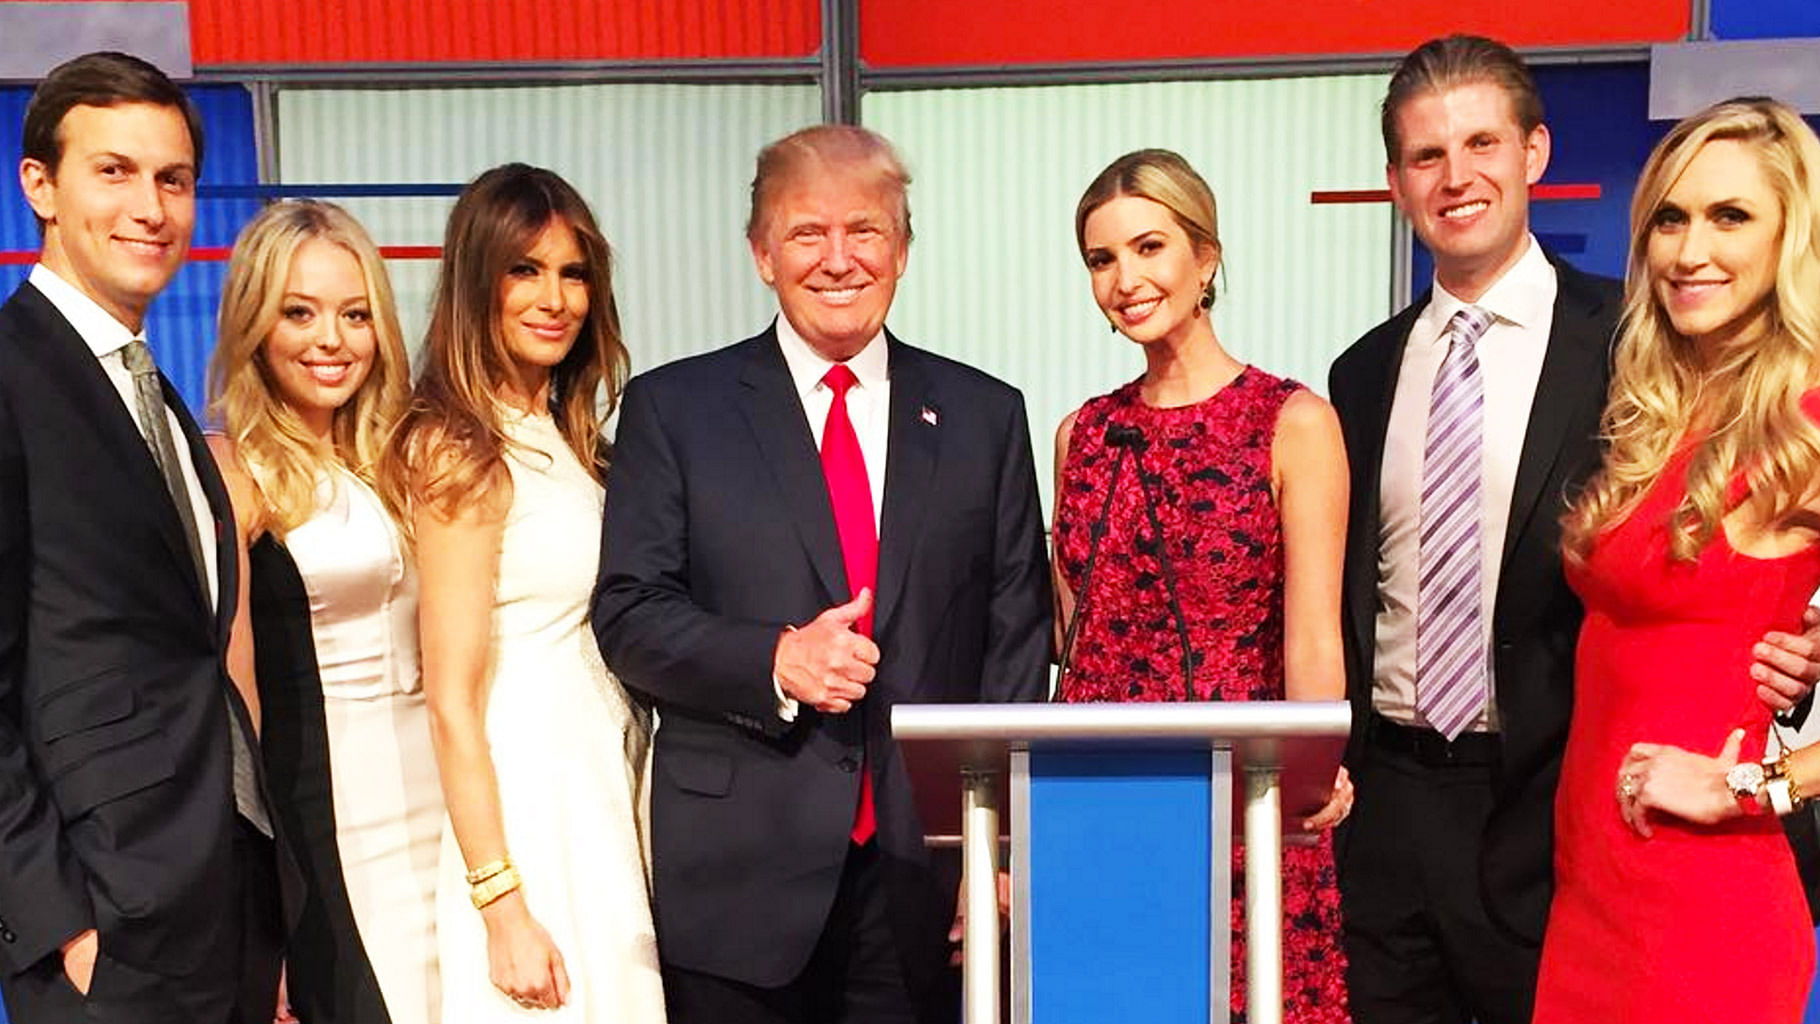 From left to right: Jared Kushner, Tiffany Trump, Melania Trump, Donald Trump, Ivanka Trump, Eric Trump and Lara Trump. 